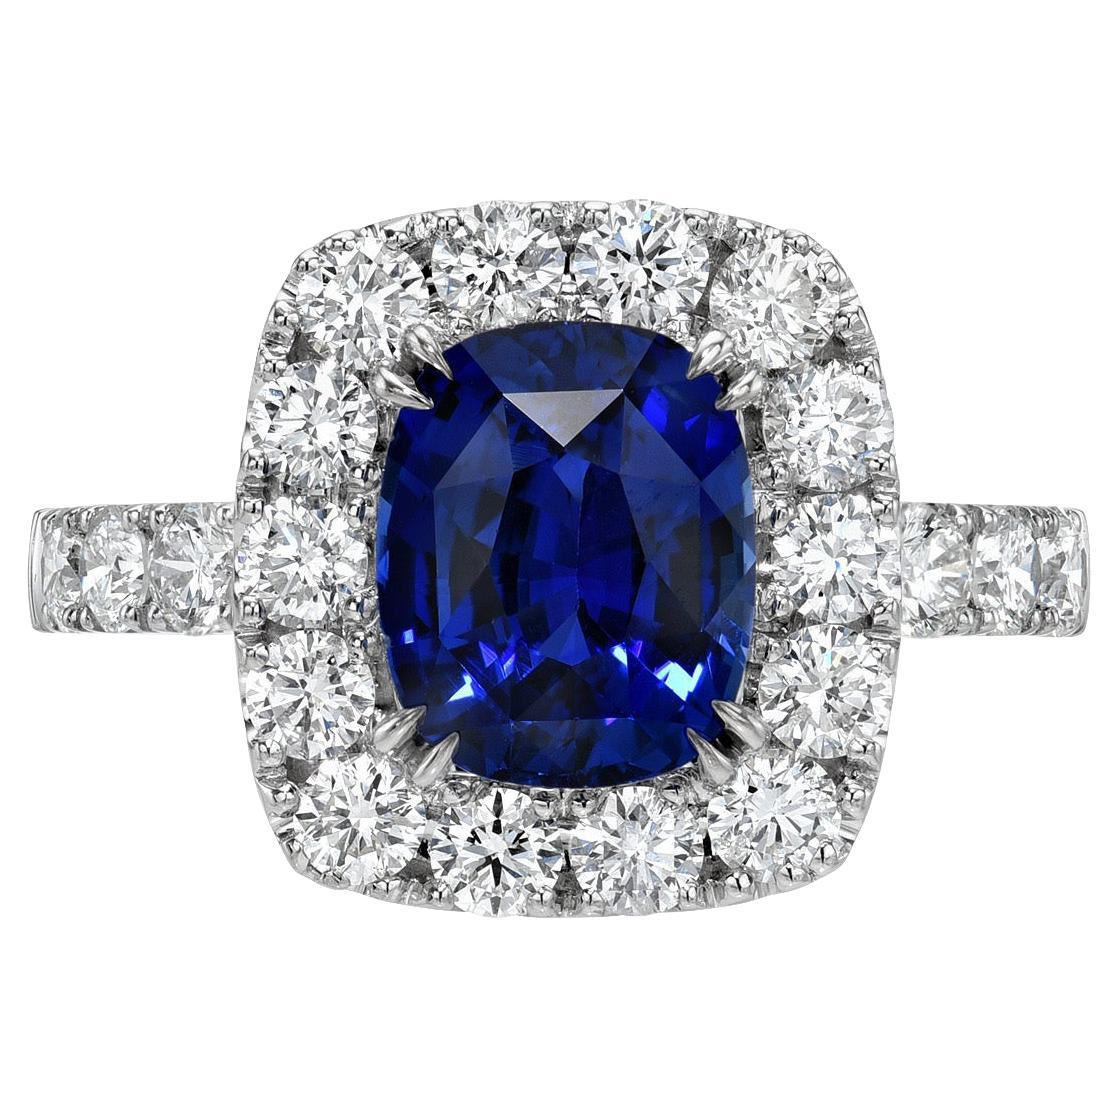 Contemporary Sapphire Ring 2.71 Carat Blue Cushion